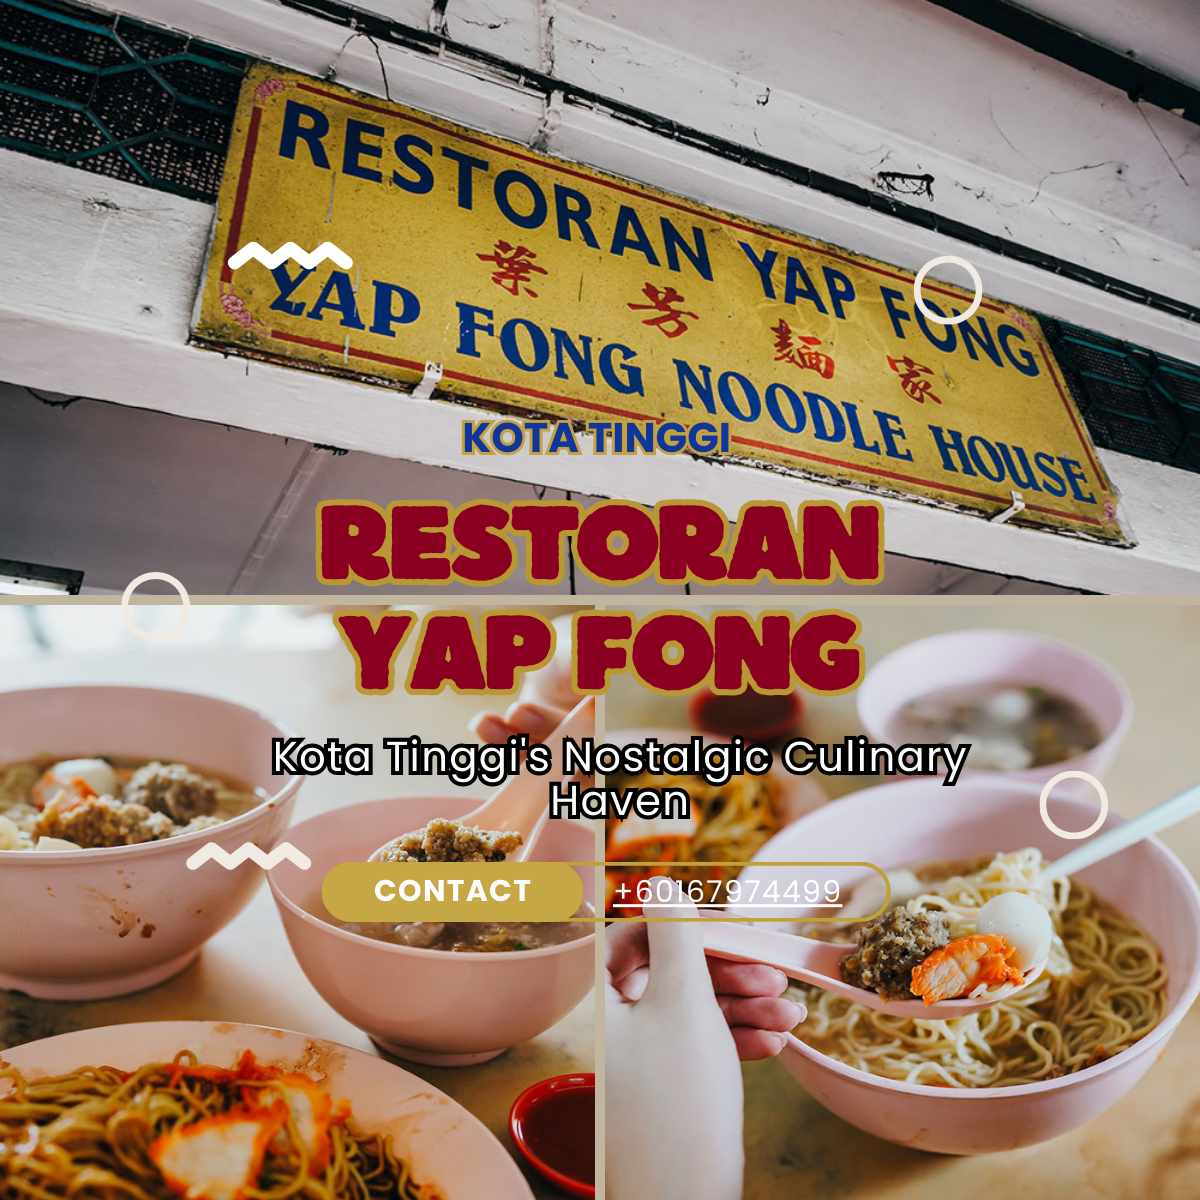 Restoran Yap Fong